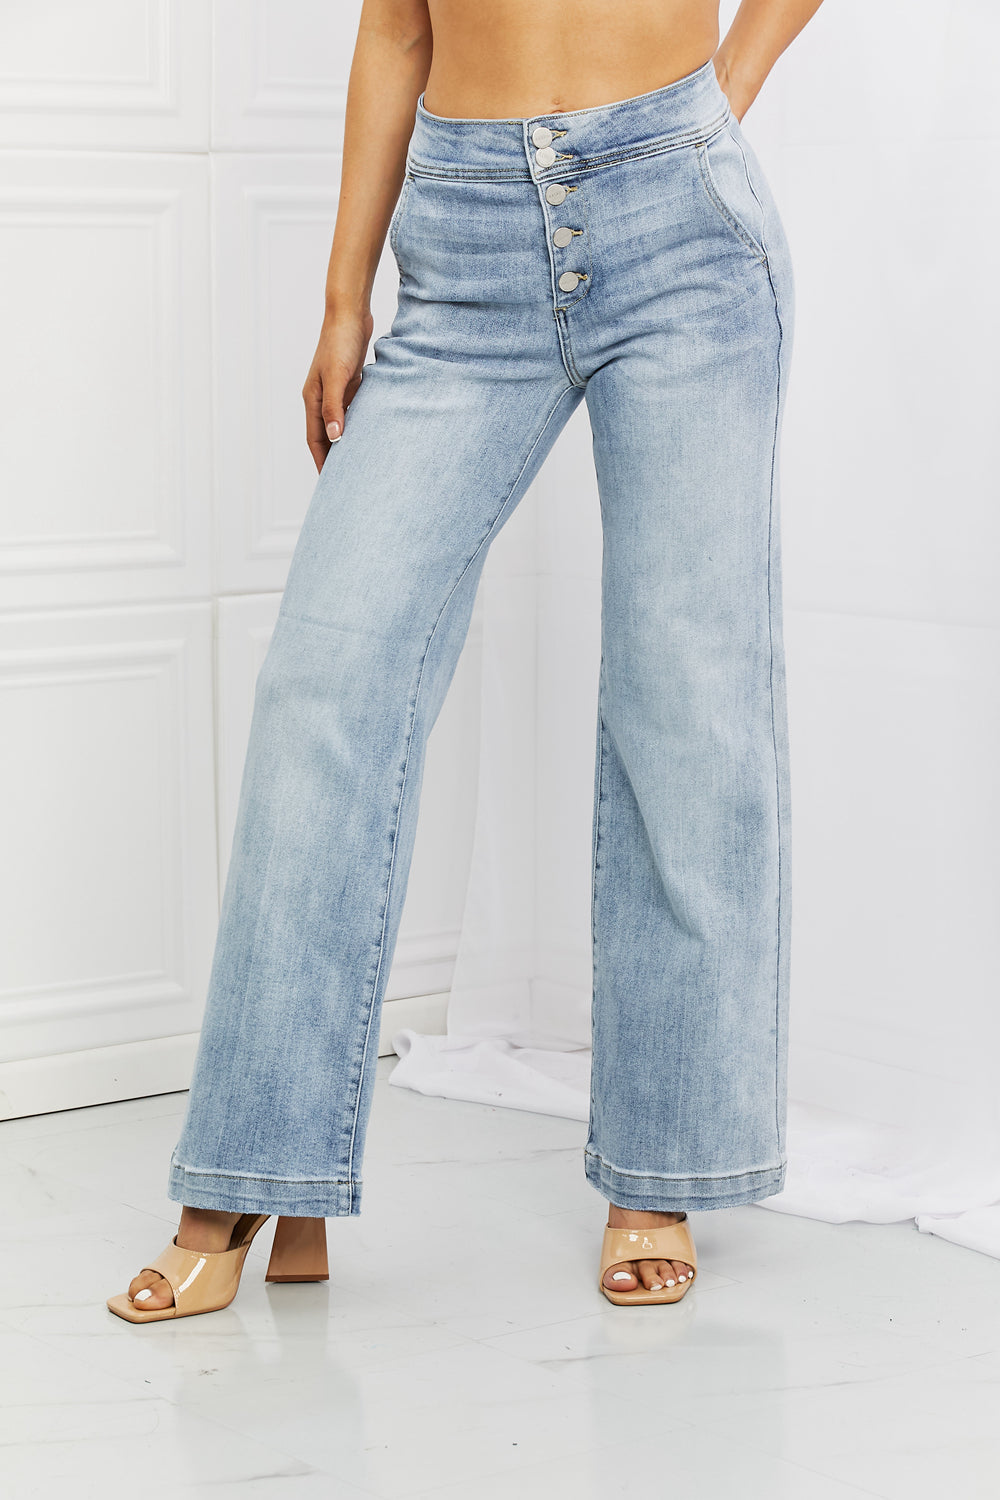 RISEN Celia Wide Flare Jeans Pants RYSE Clothing Co. Light 1(25) 